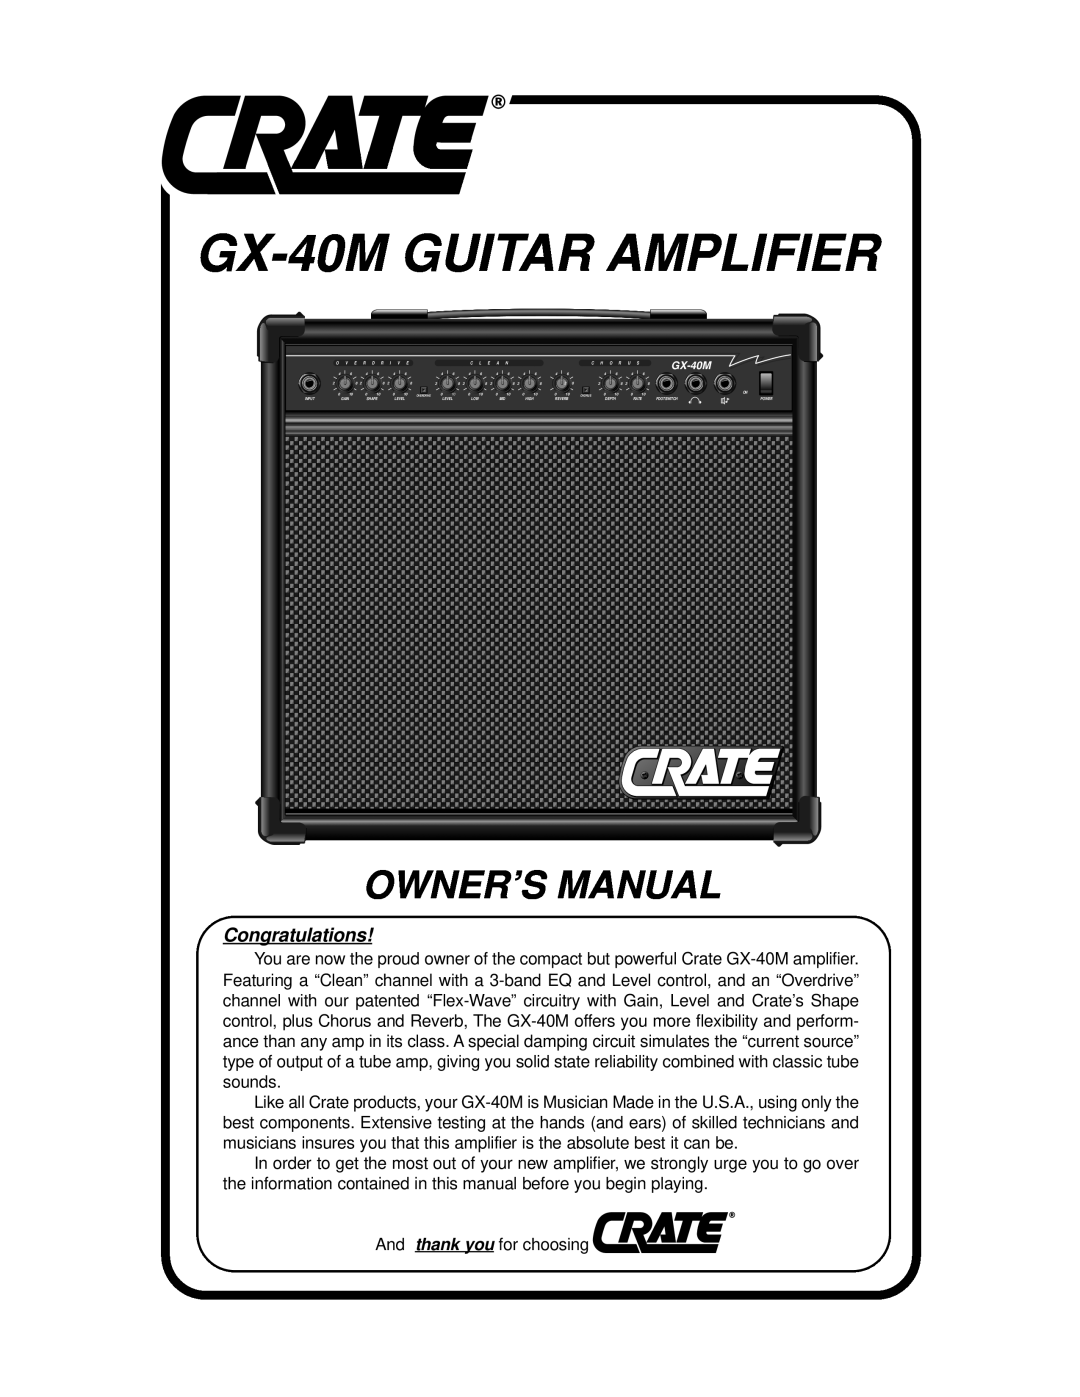 Crate Amplifiers owner manual @€À @€À, GX-40M GUITAR AMPLIFIER, Owner’S Manual, Congratulations, O V E R D R I V E 